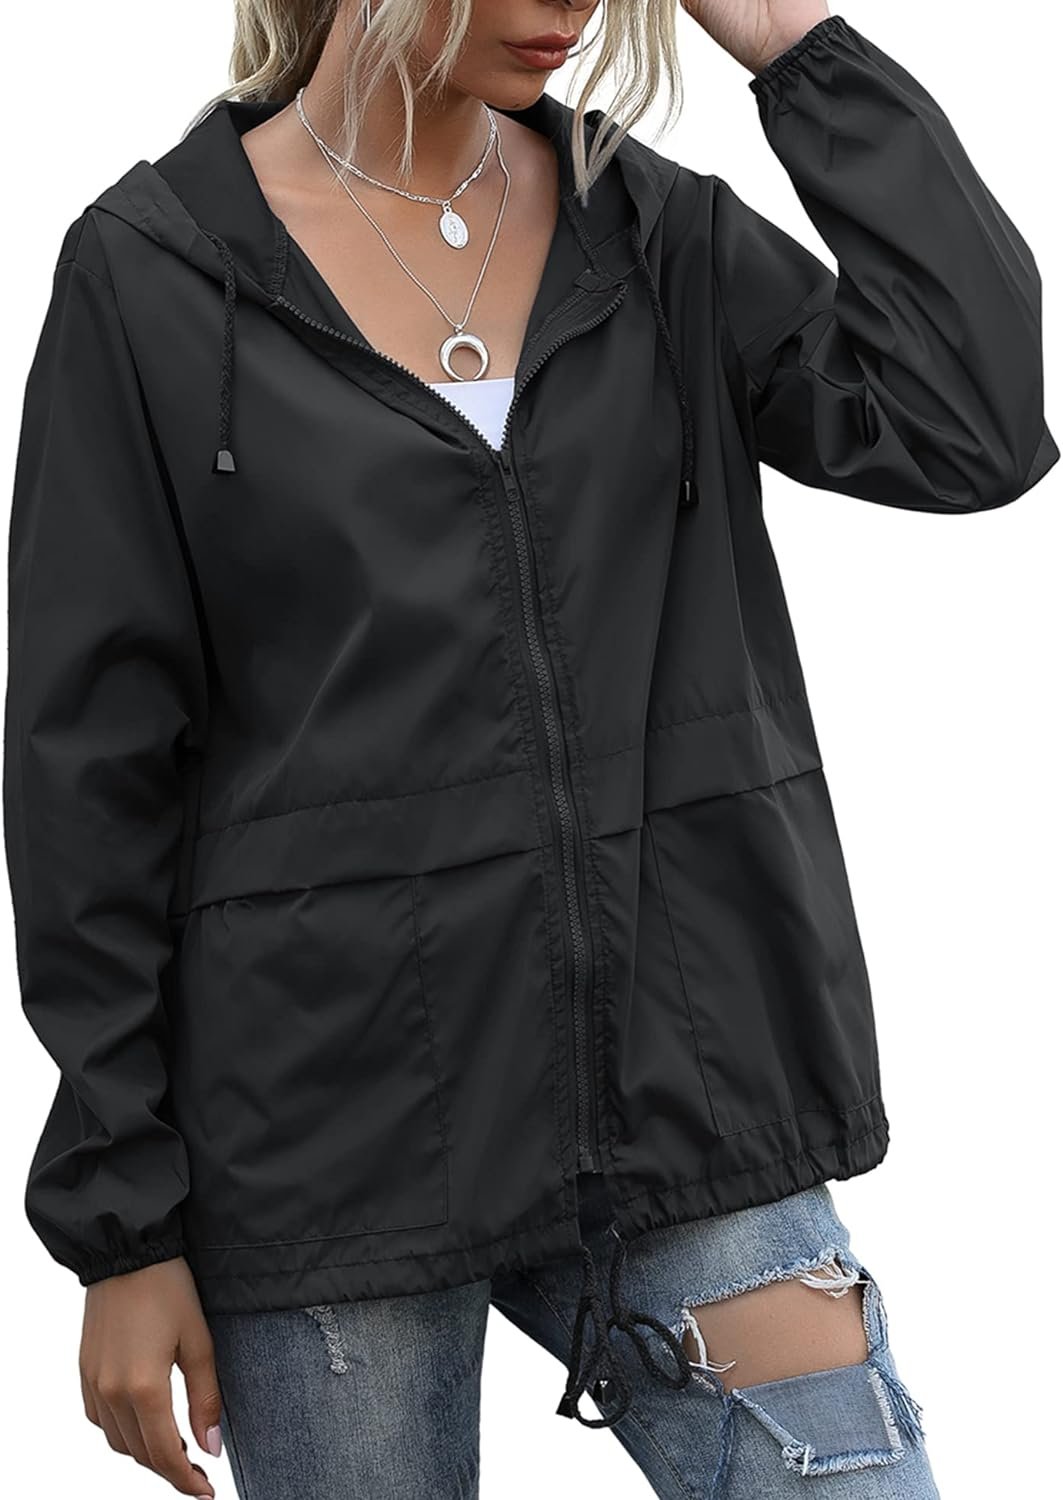 Womens Waterproof Raincoat Lightweight Rain Jacket Hooded Windbreaker with Pockets for Outdoor